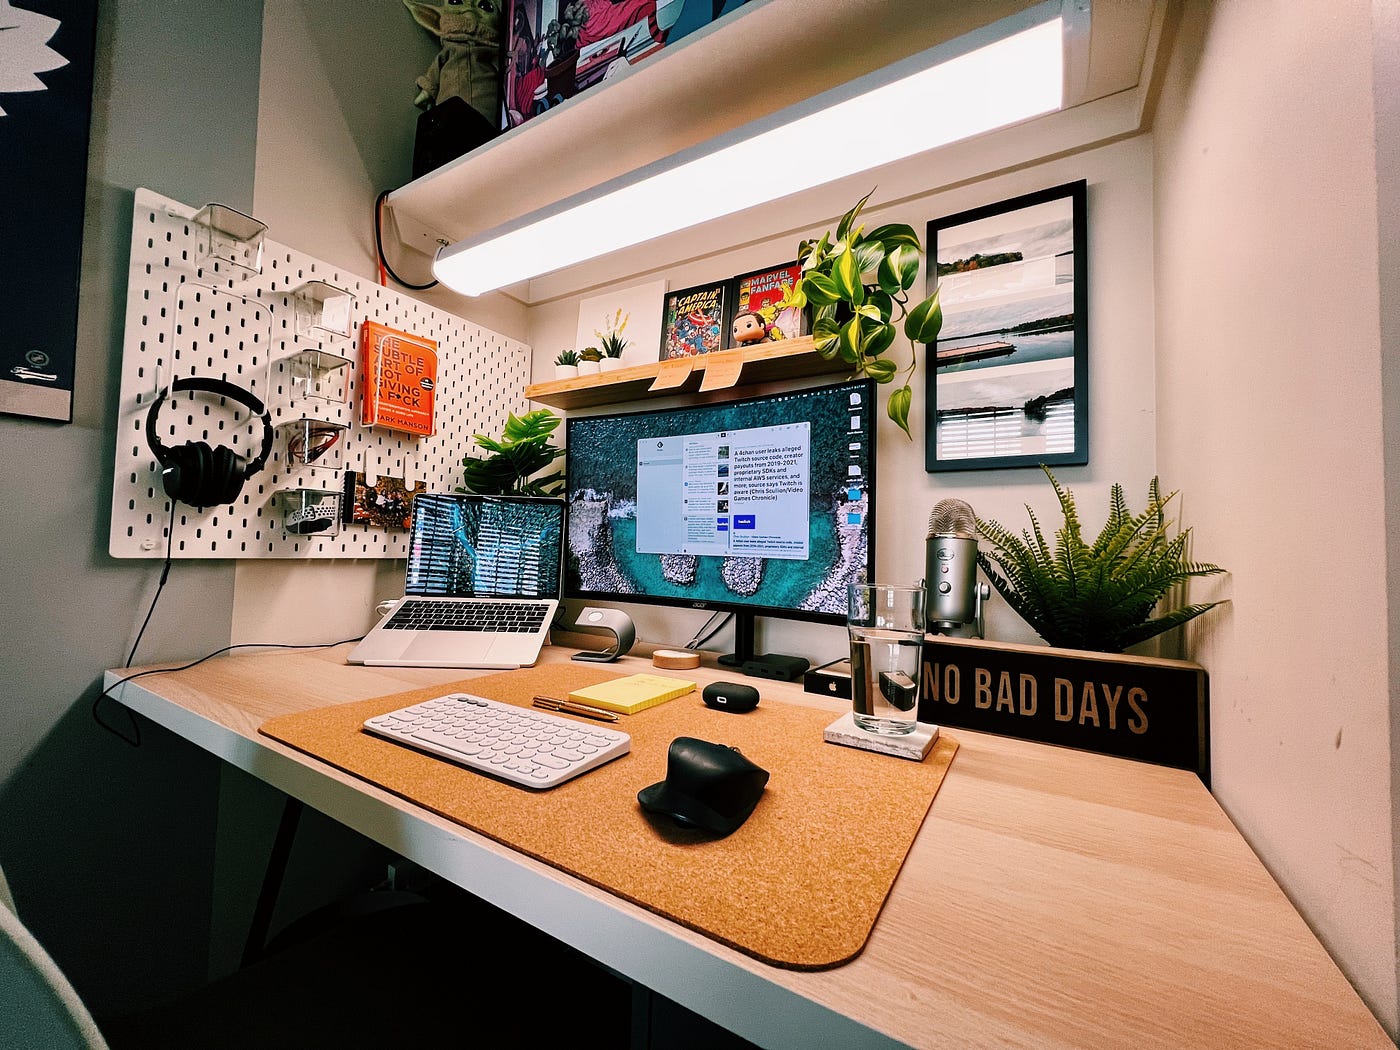 The Best Computer Desktop Backgrounds for Boosting Productivity